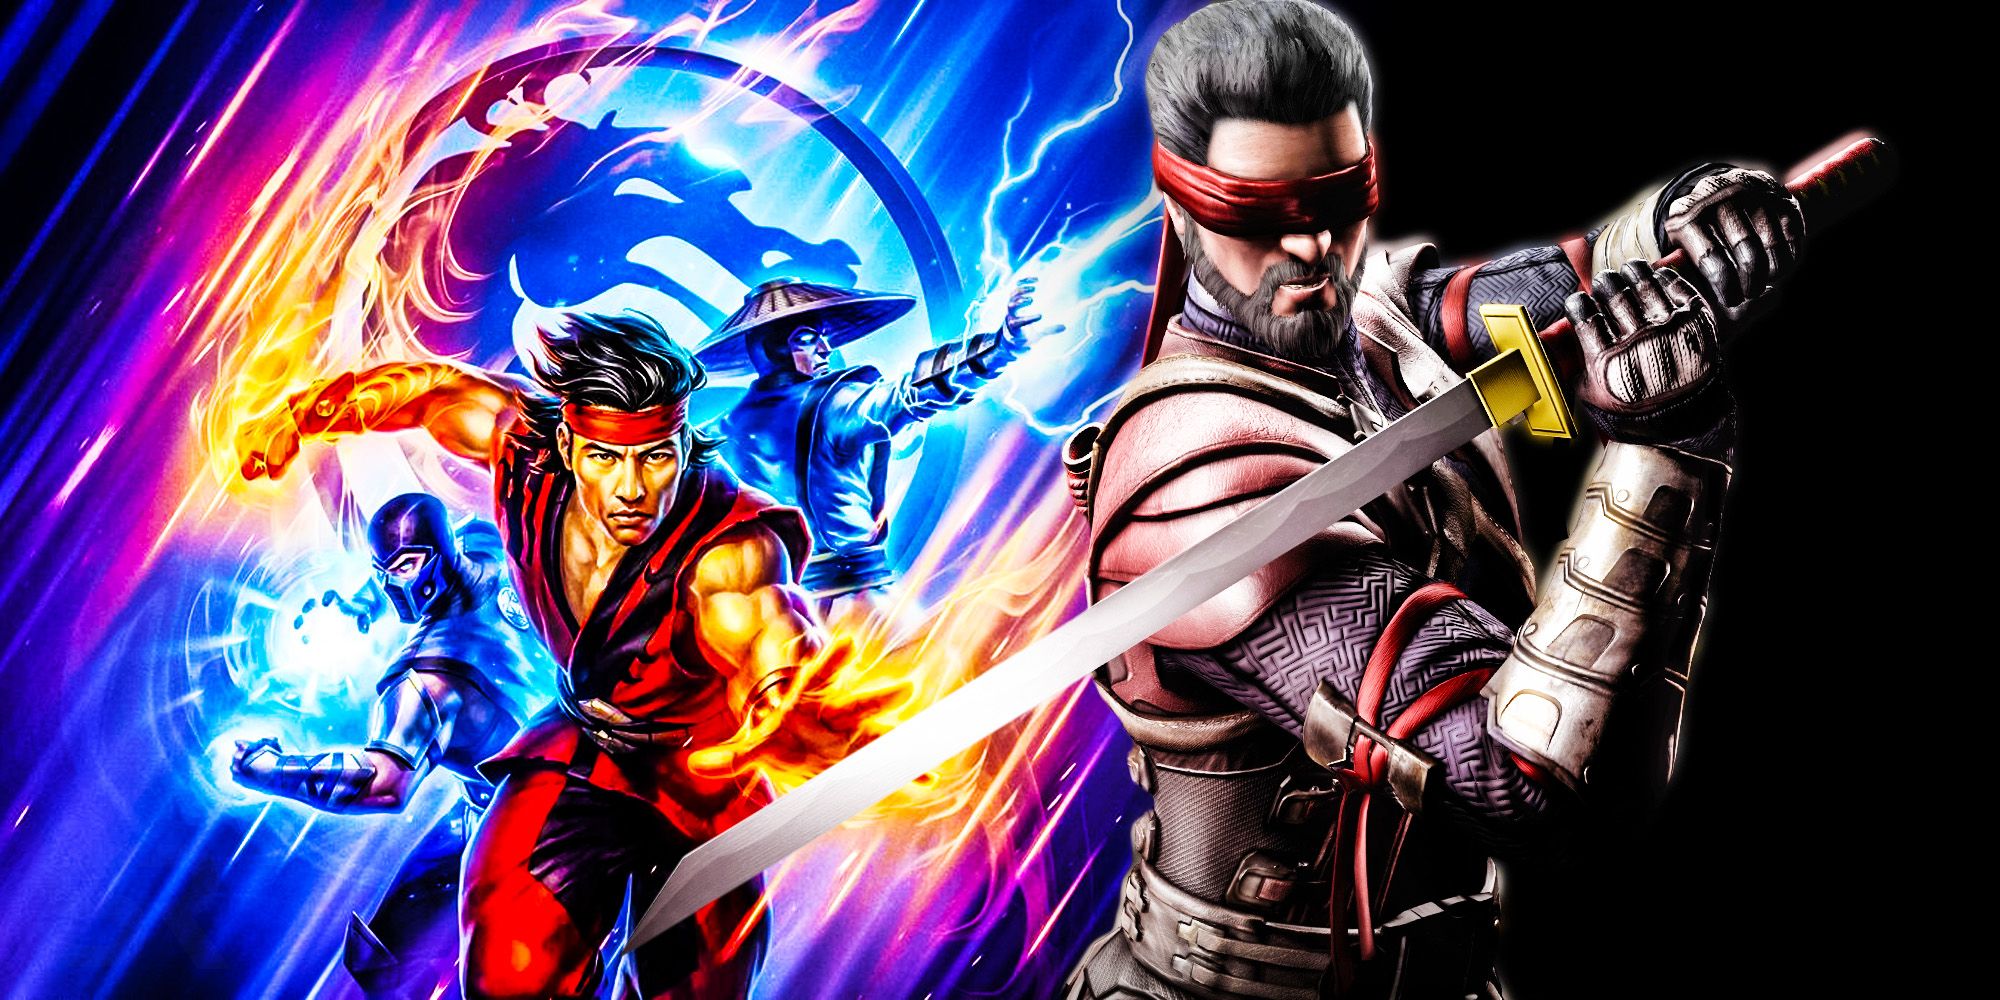 Mortal Kombat Legends: Cage Match Debuts in October - IGN